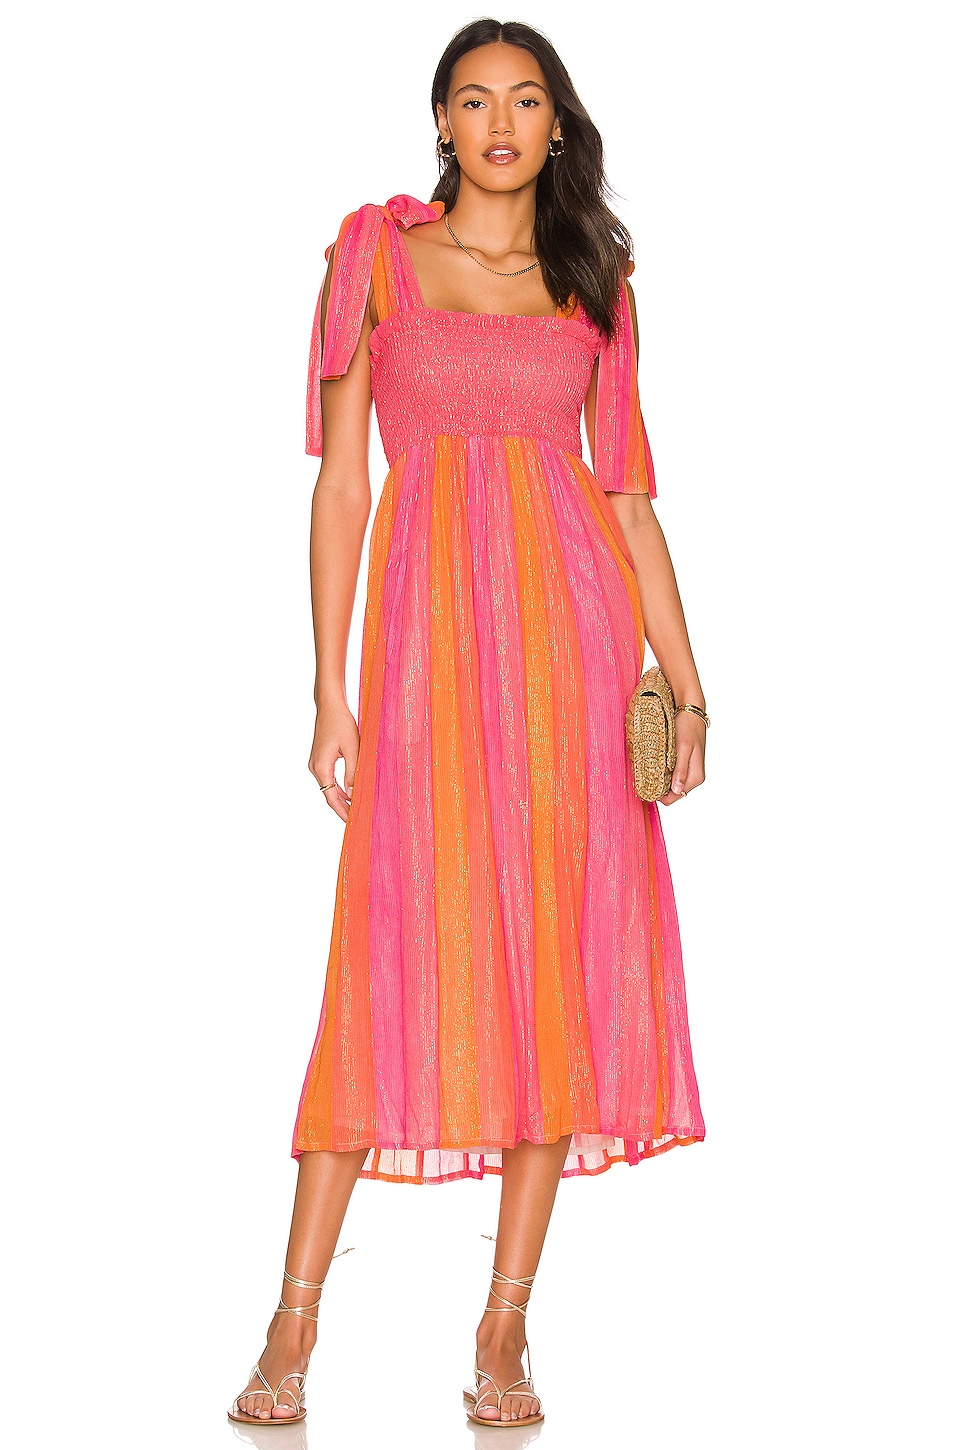 Sundress Melina Dress in Marbella Mix Neon Girl